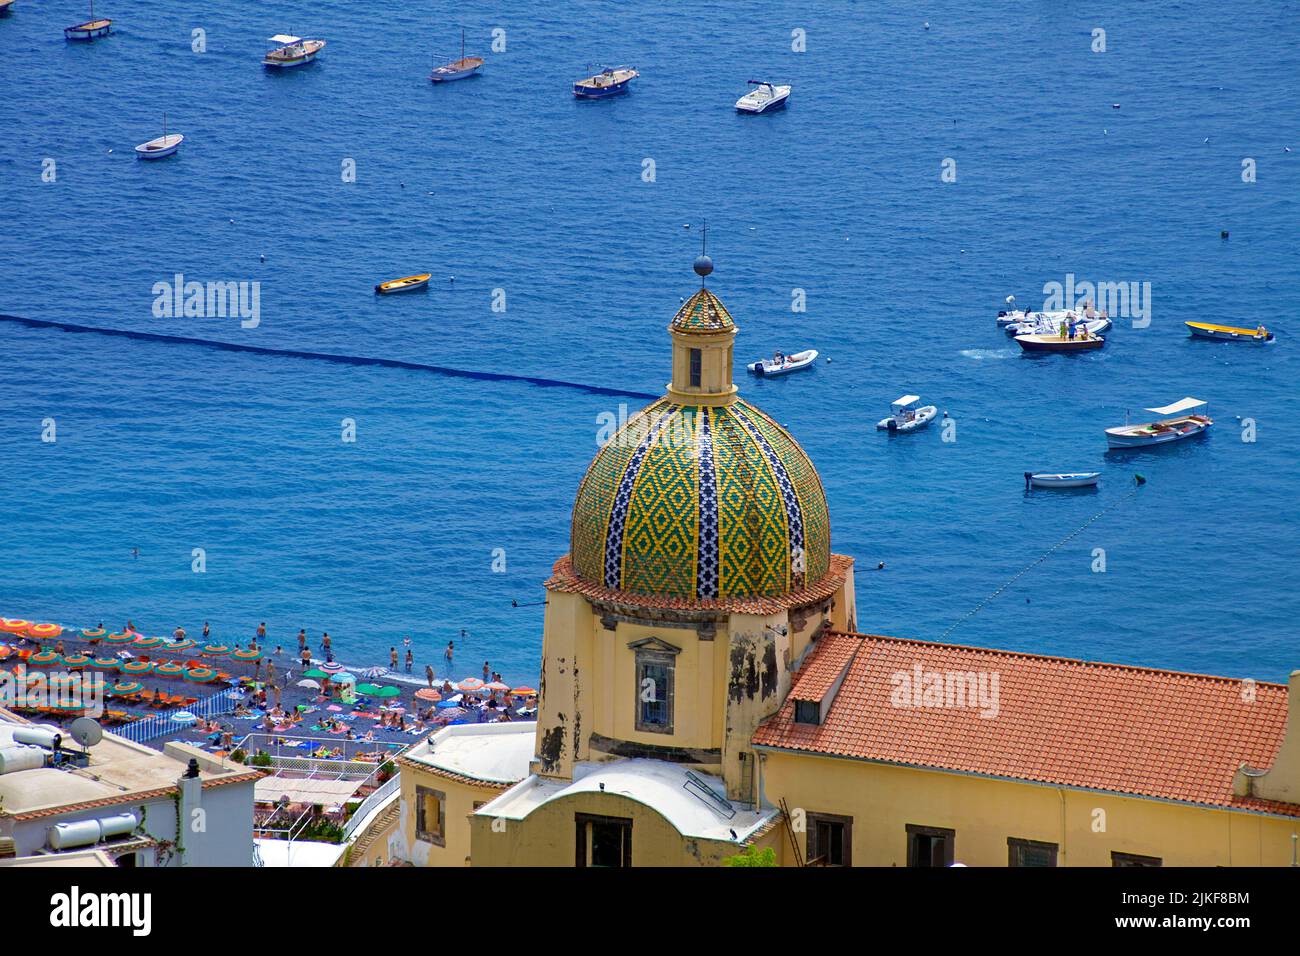 Church of the Virgin Mary and beach, Positano, Amalfi coast, Unesco World Heritage site, Campania, Italy, Mediterranean sea, Europe Stock Photo